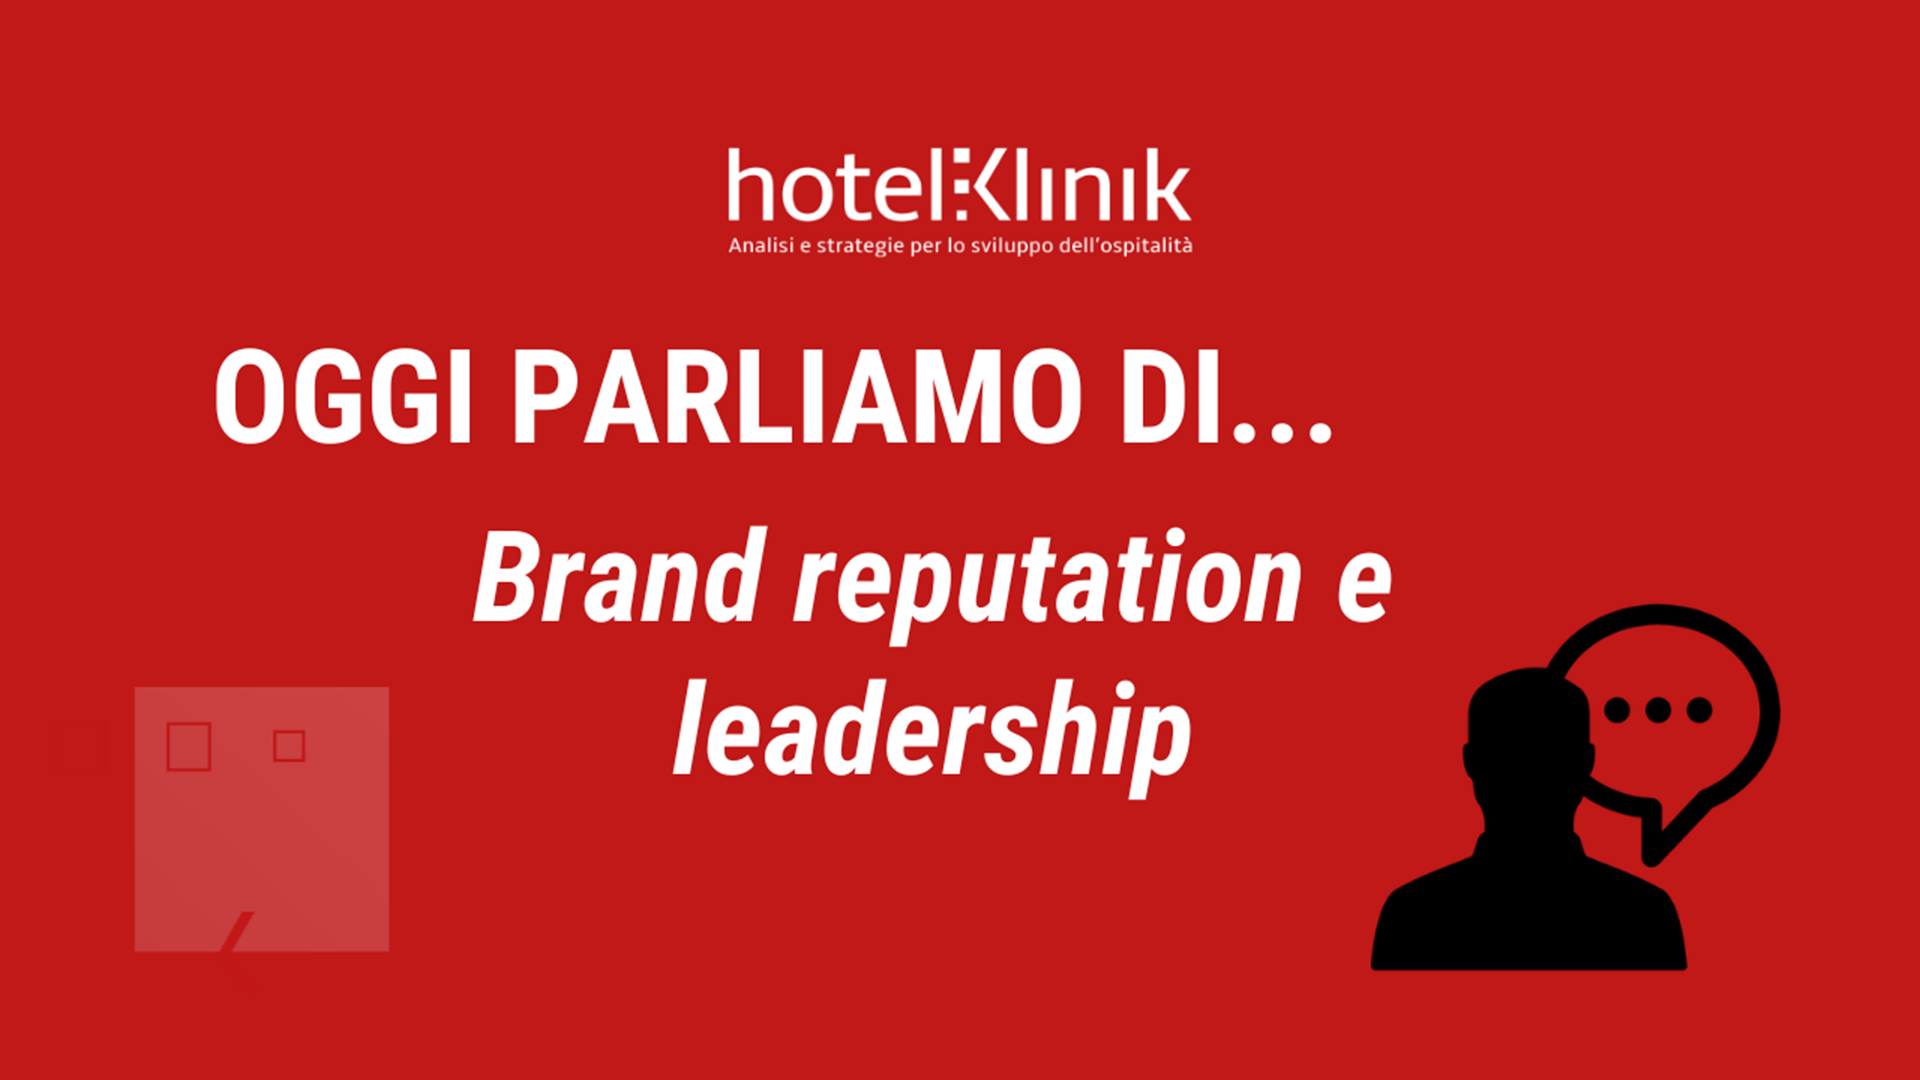 Oggi parliamo di... brand reputation e leadership